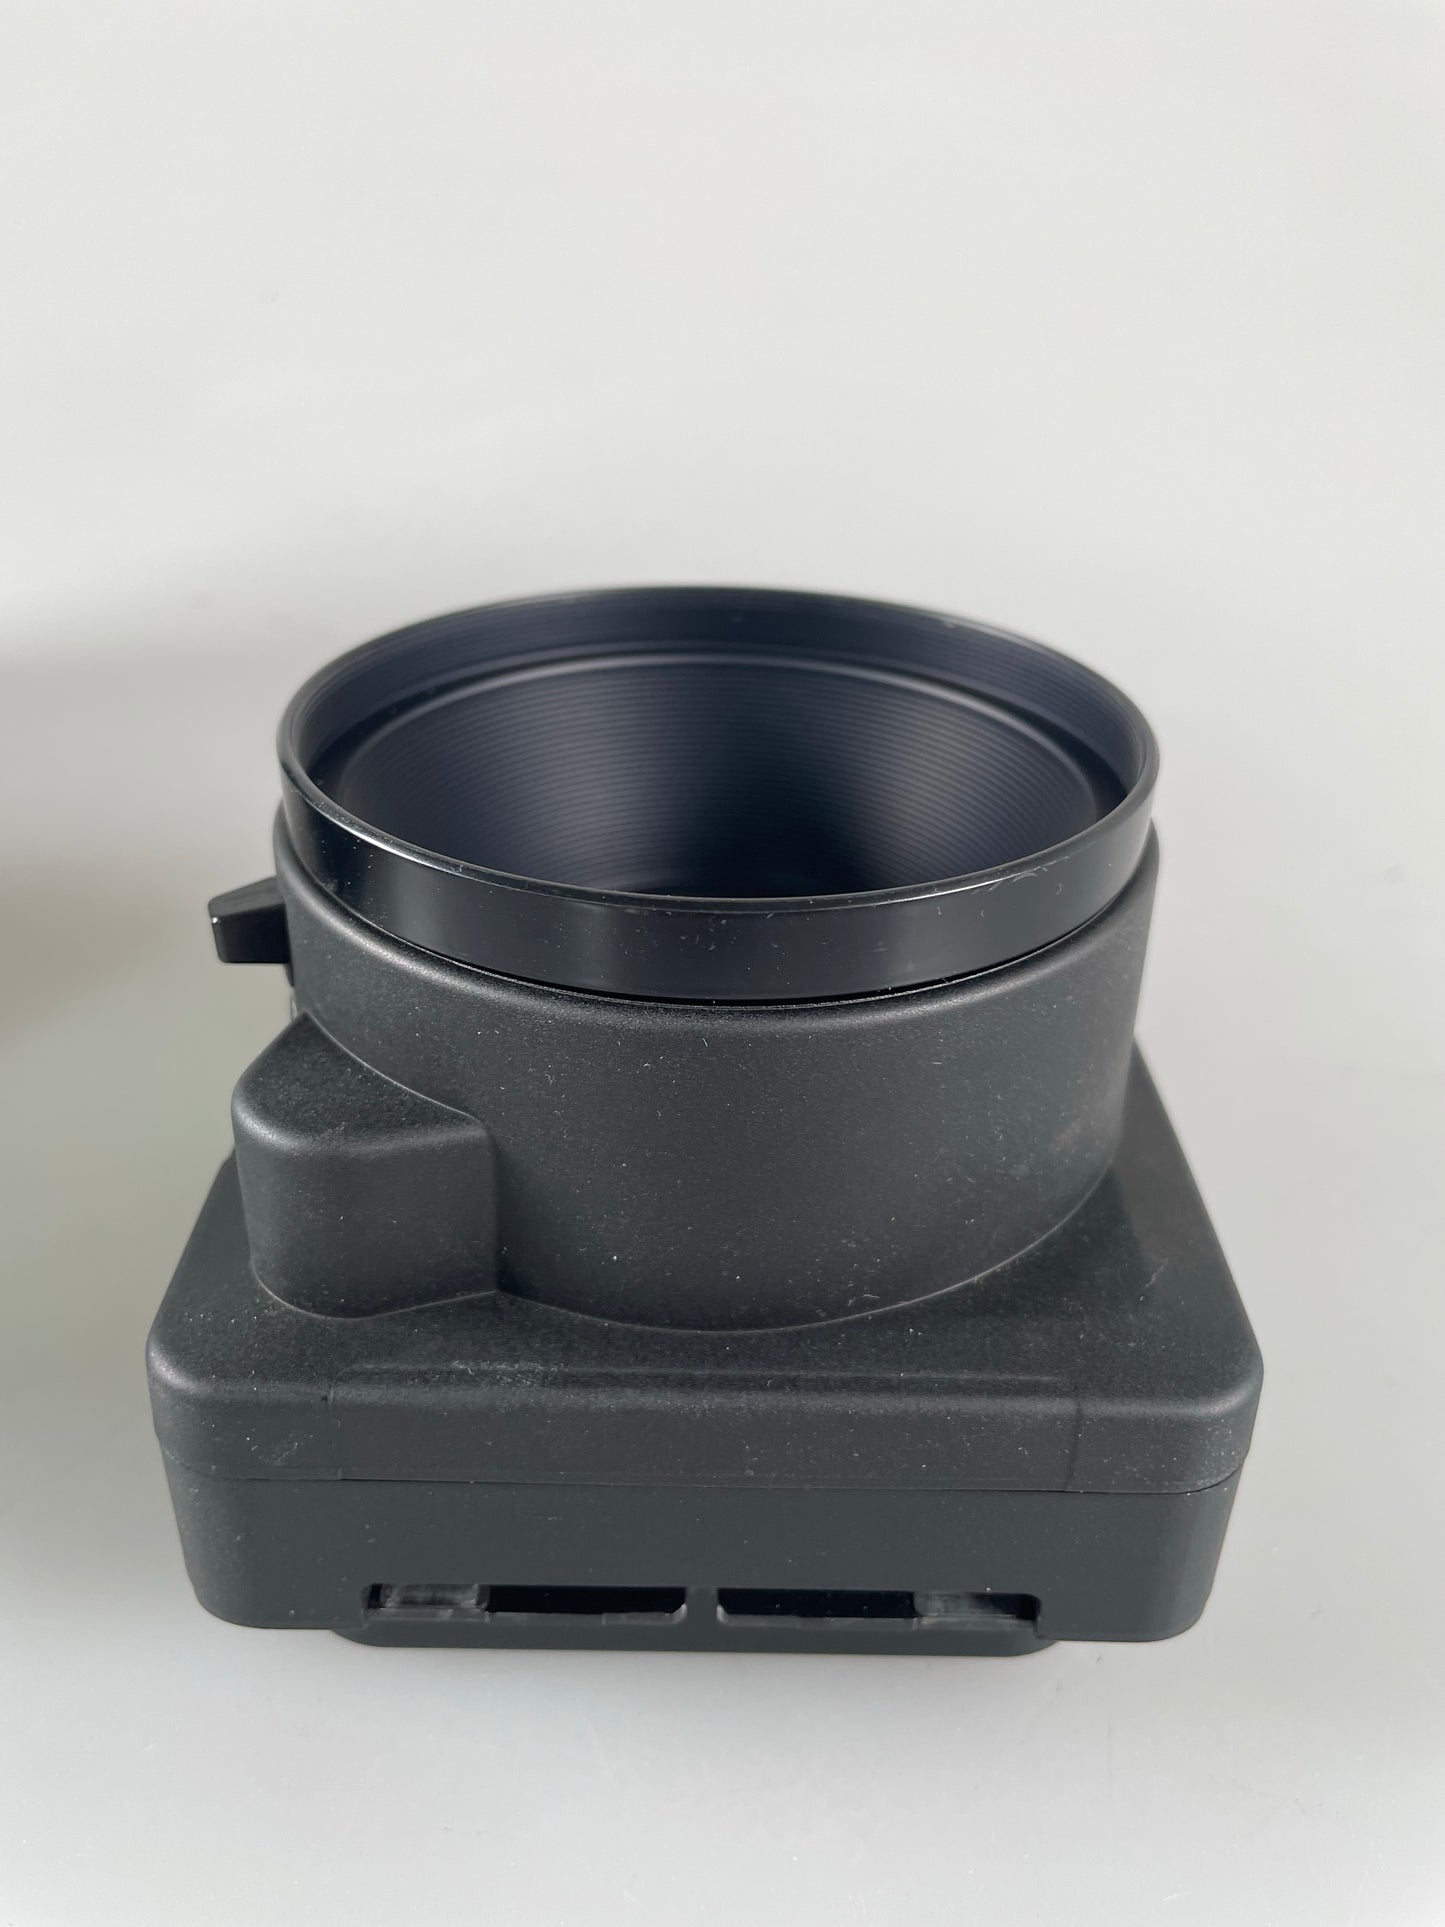 Fuji Fujifilm EBC Fujinon GX M 150mm F4.5 Lens For GX680